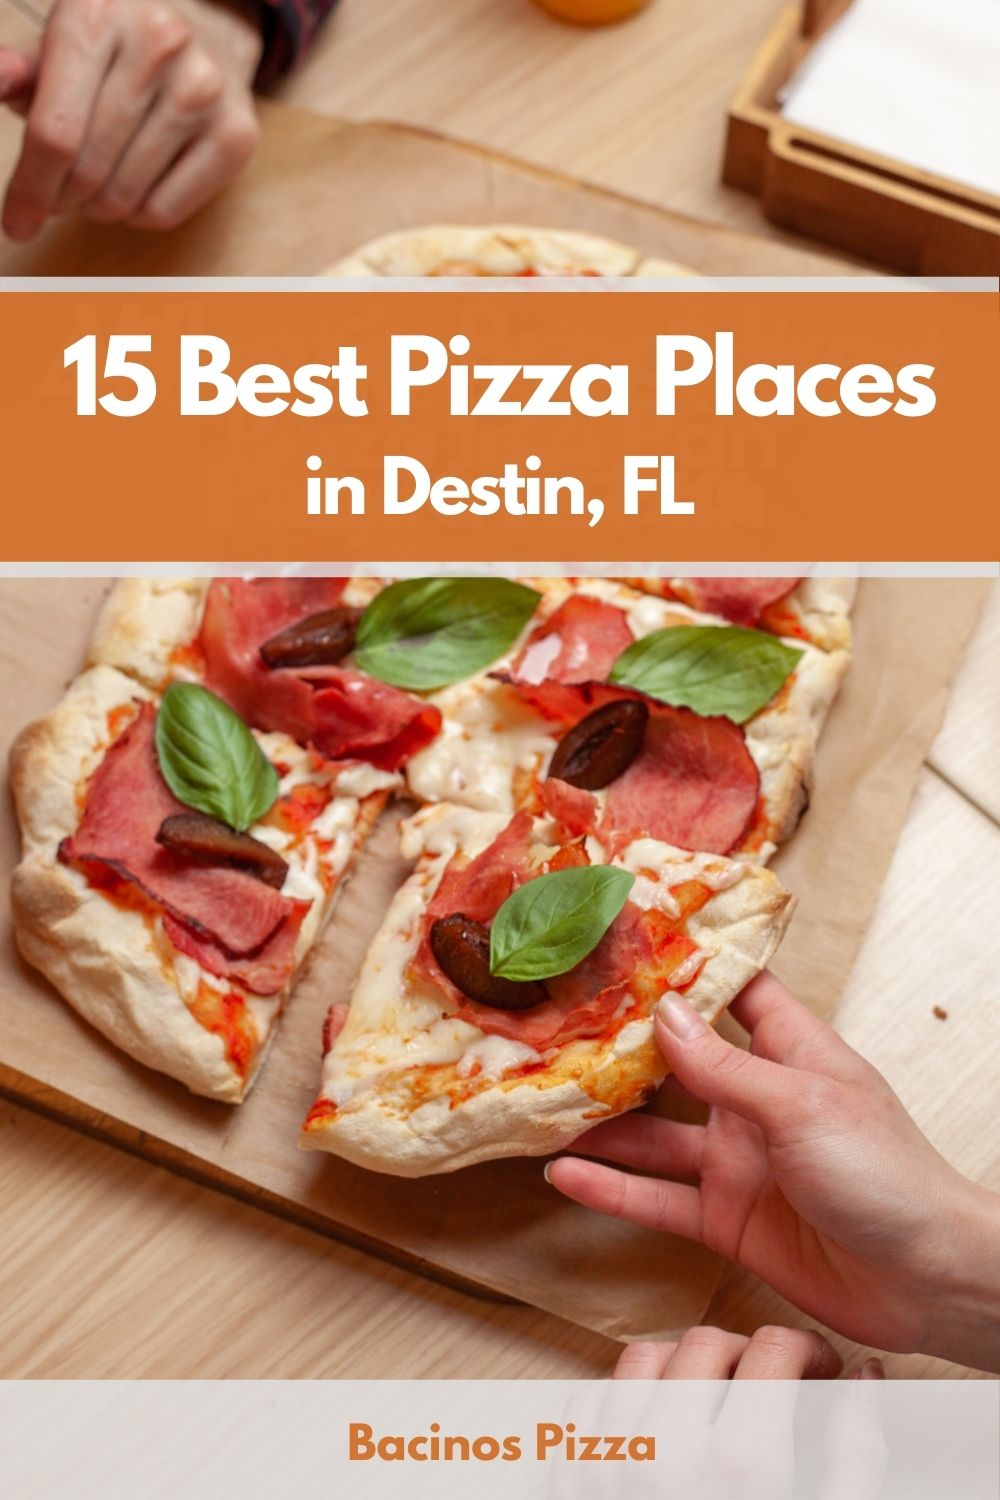 15 Best Pizza Places in Destin, FL pin 2